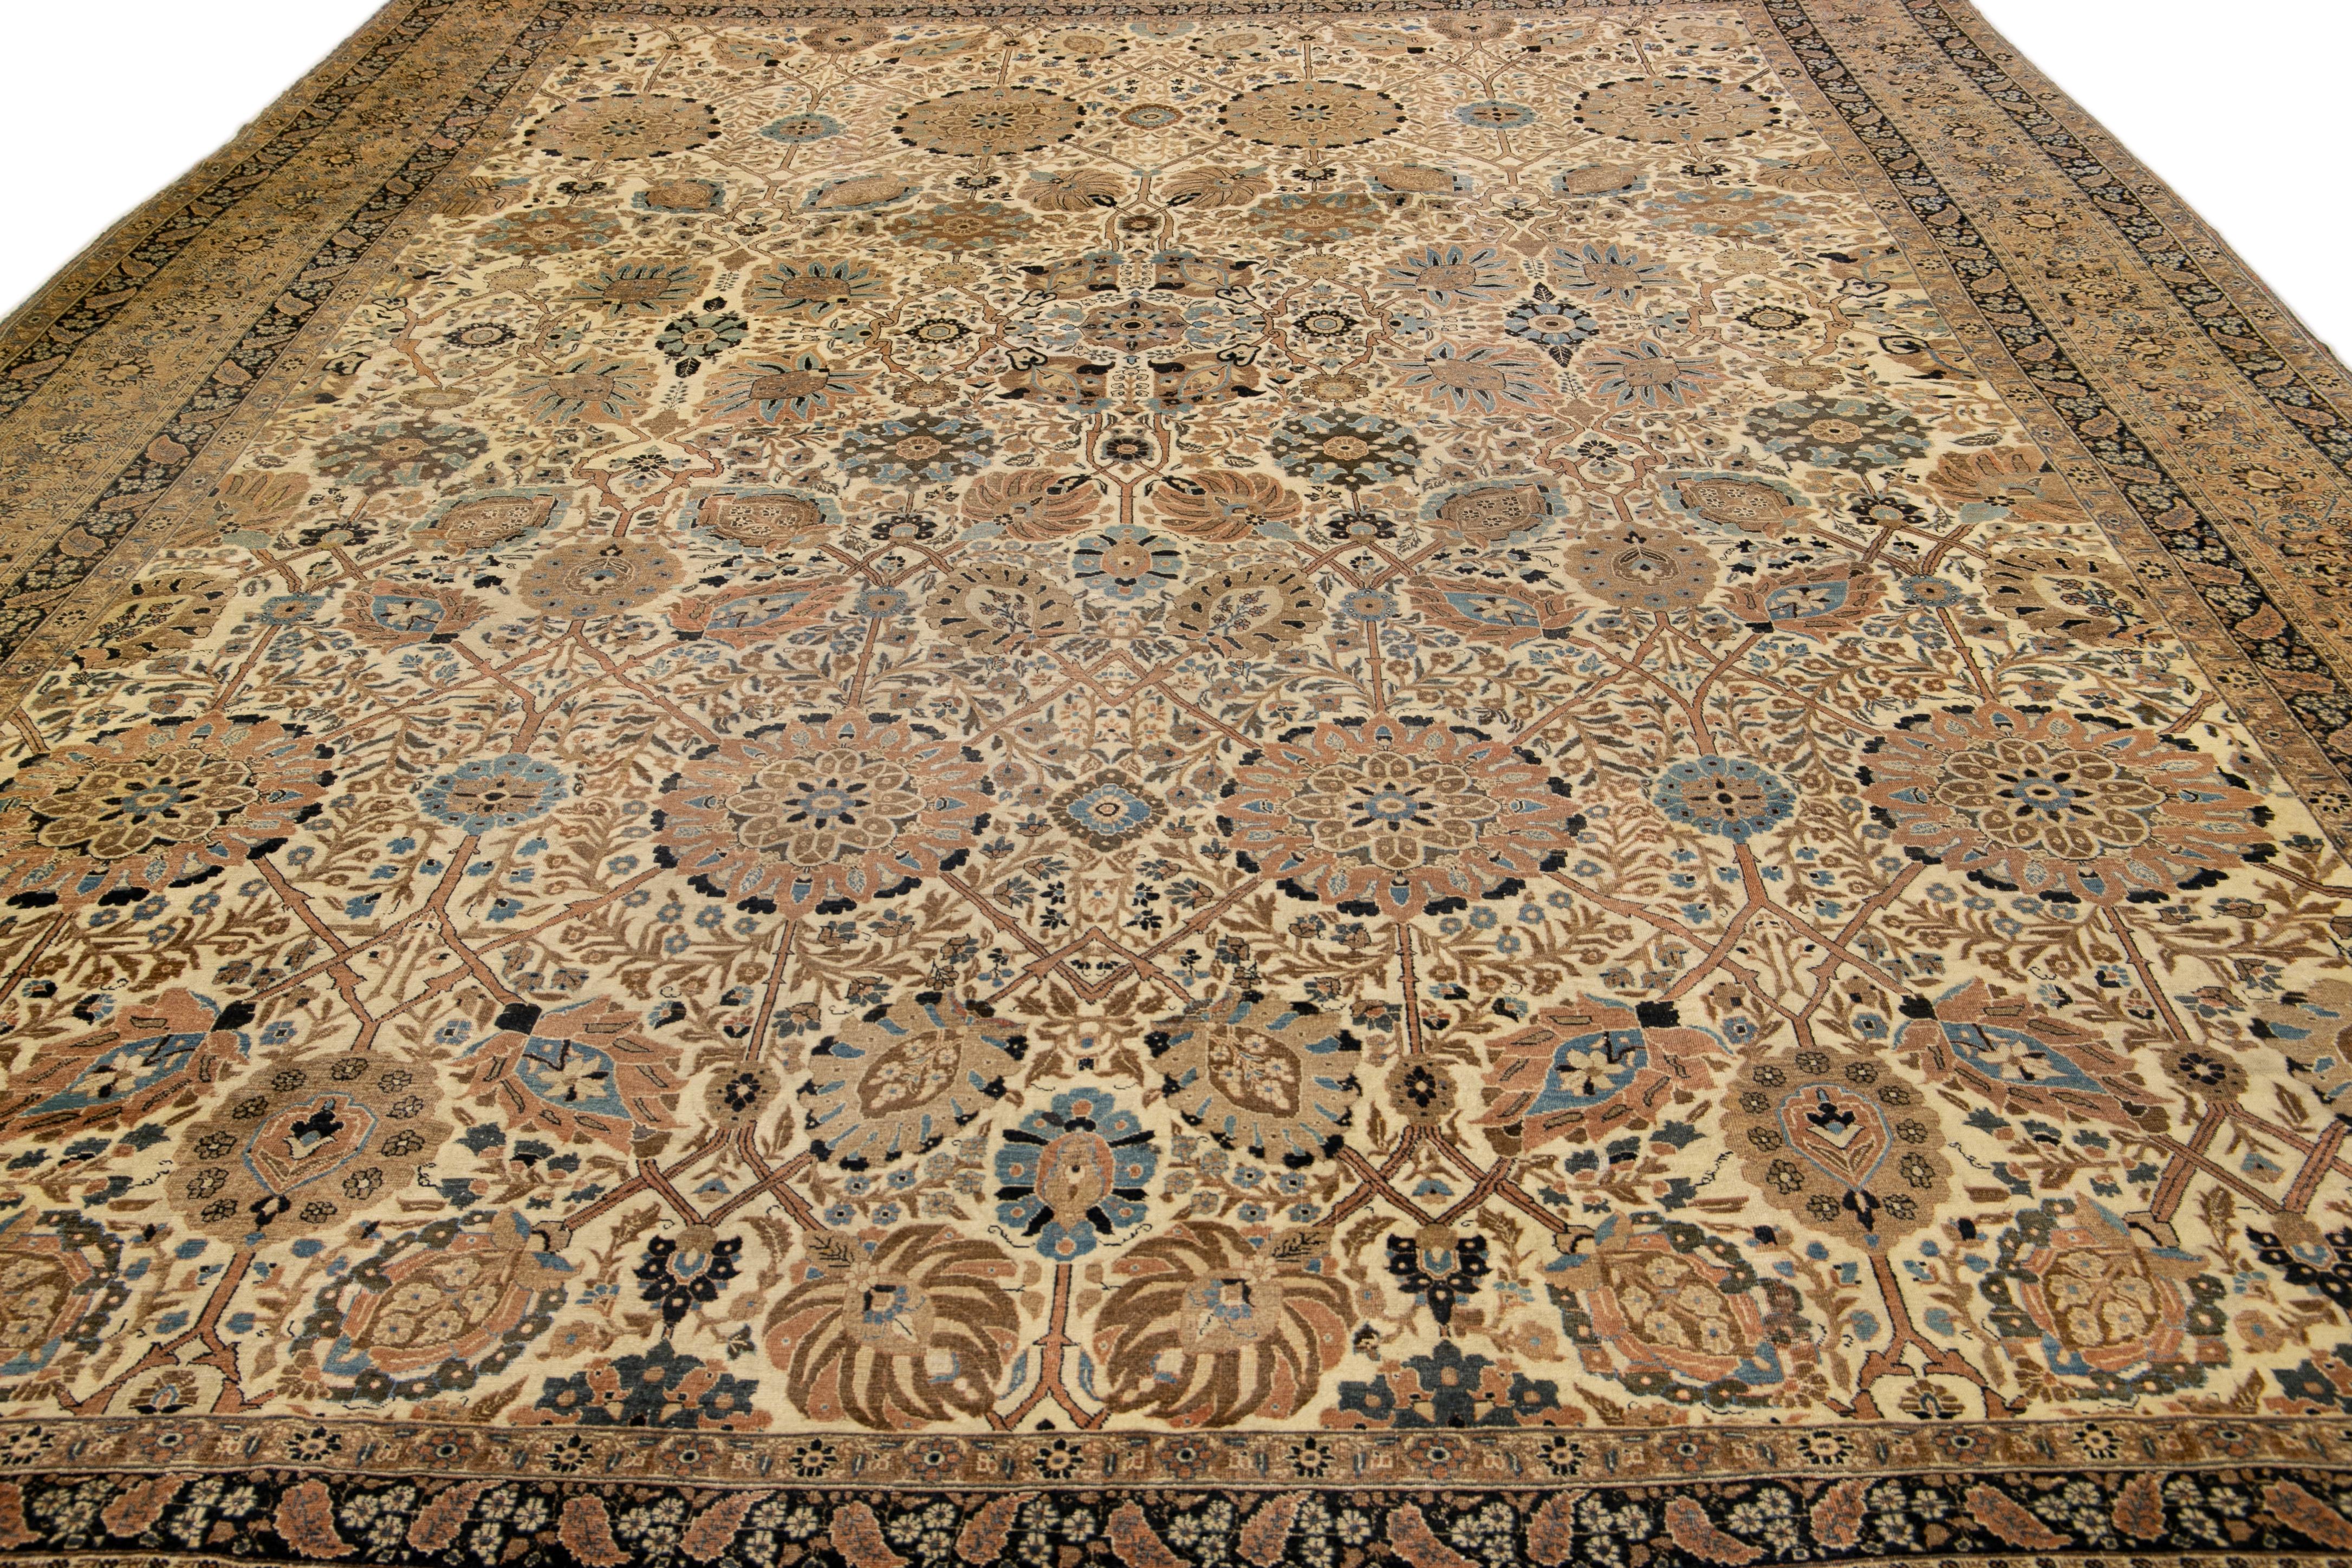 Antique Persian Tabriz Handmade Allover Motif Beige Oversize Wool Rug In Good Condition For Sale In Norwalk, CT